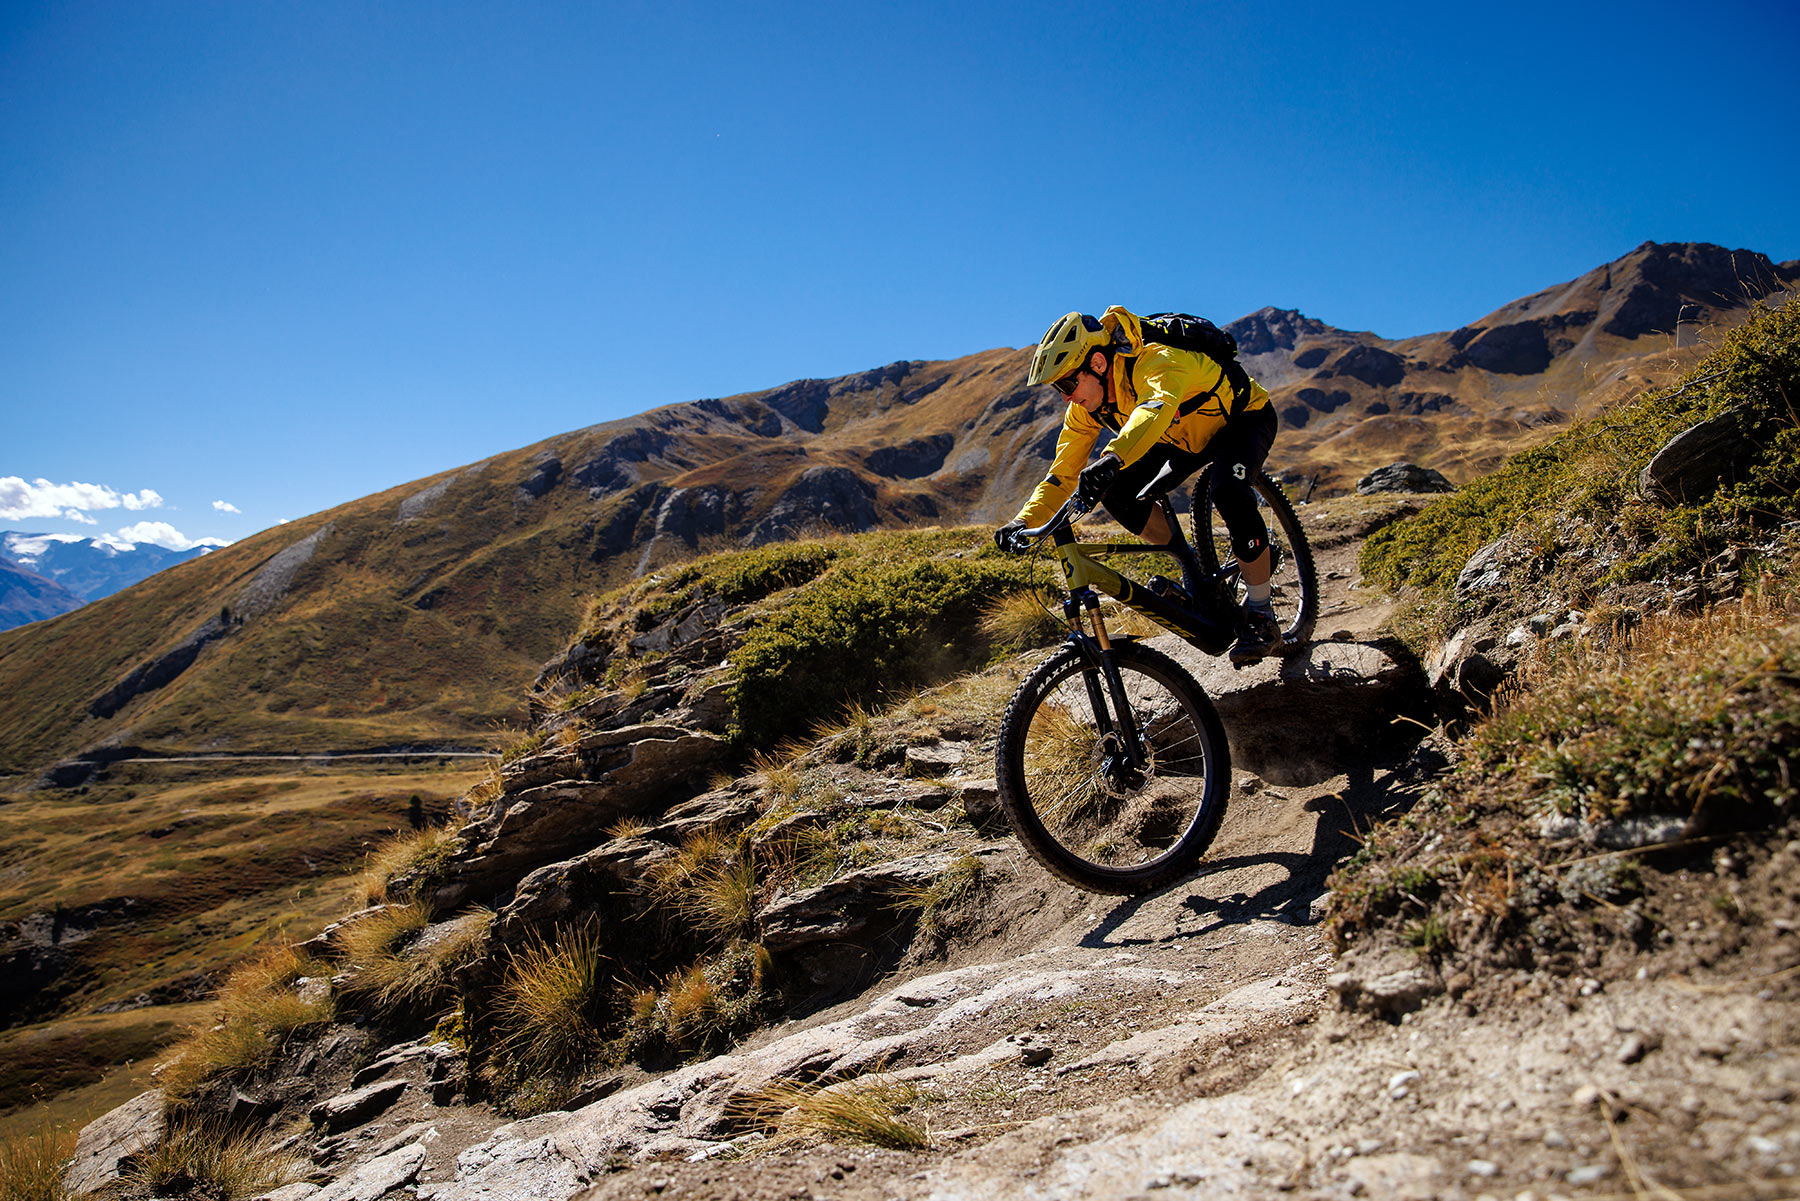 rider dropping off rocks on new scott genius mountain bike